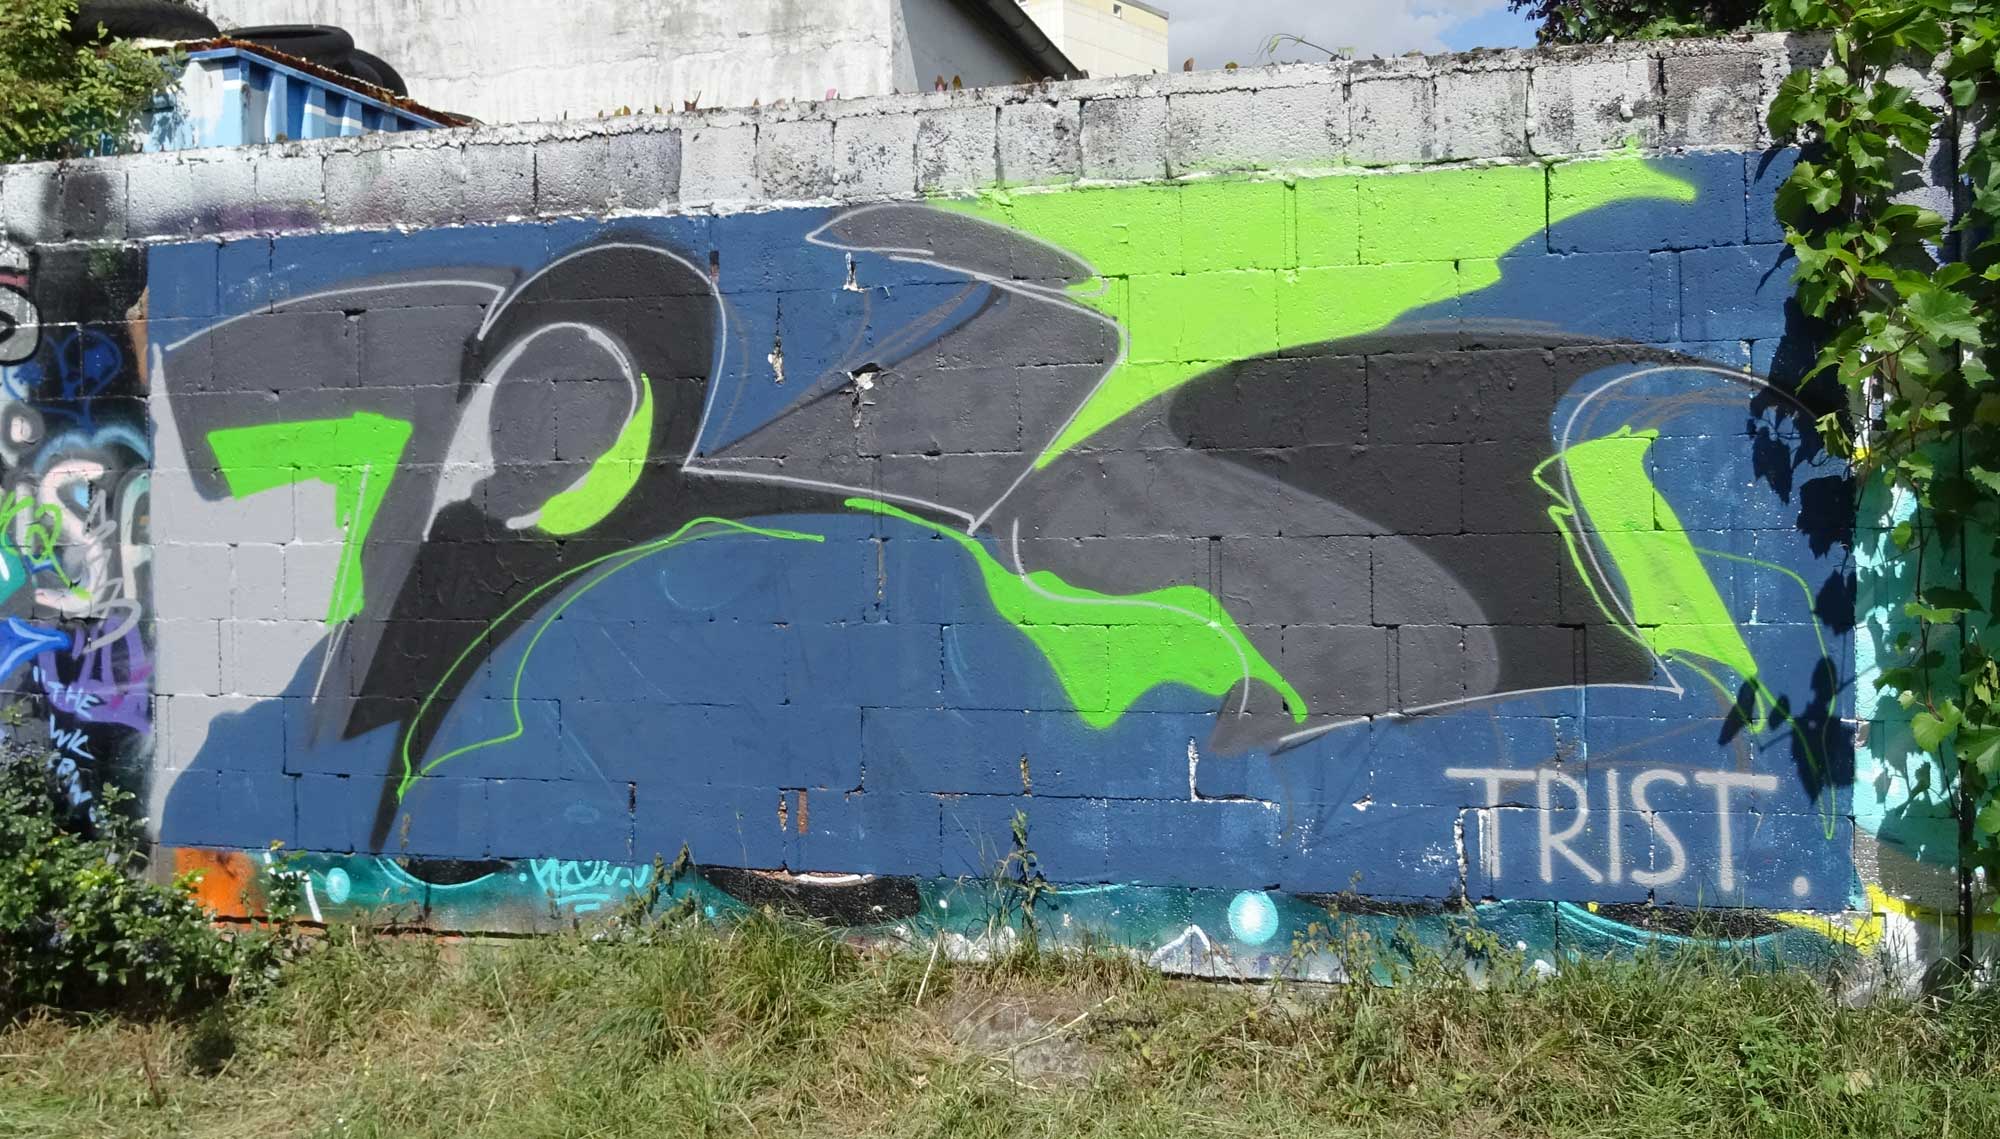 Graffiti in Worms - Trist